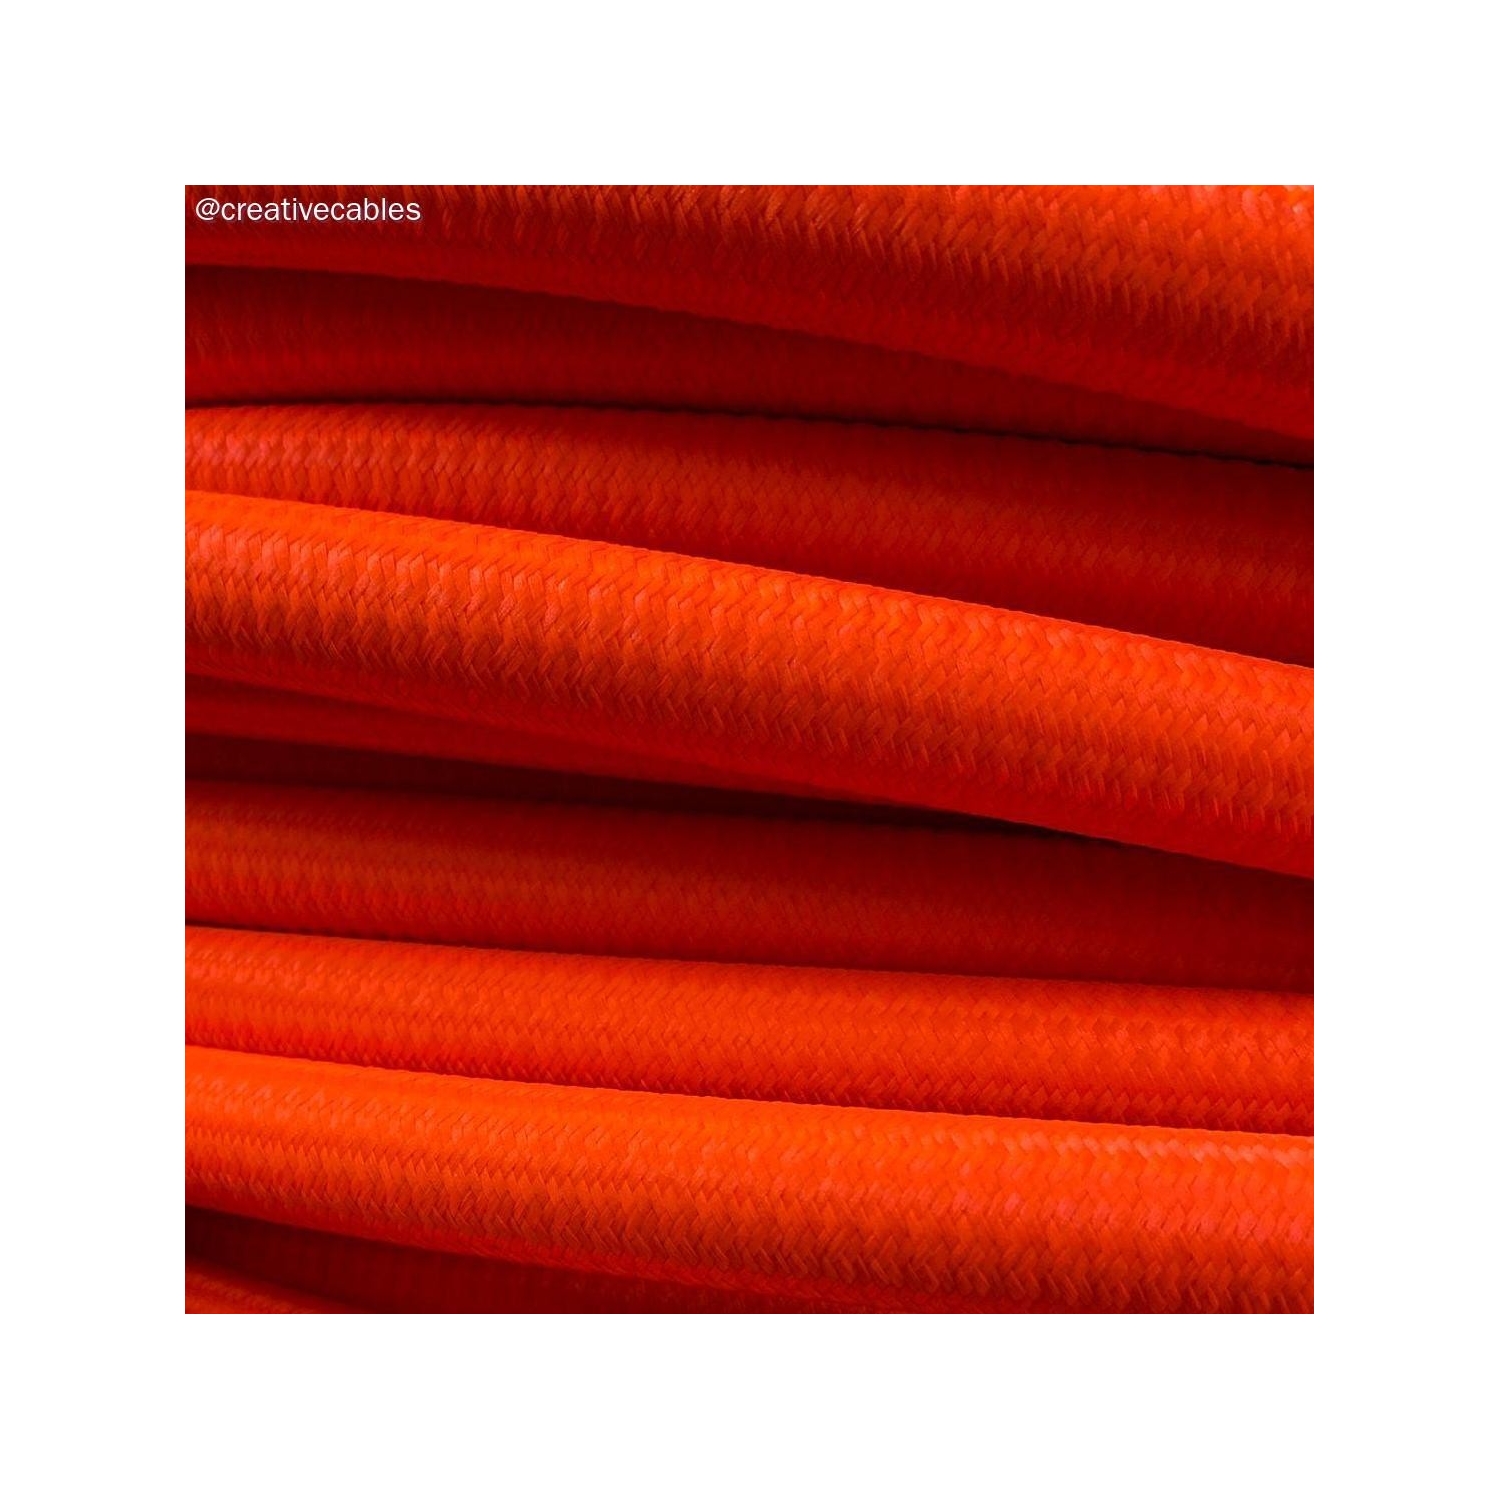 Flexible conduit, Fluo/Neon Orange fabric covering, 20 mm